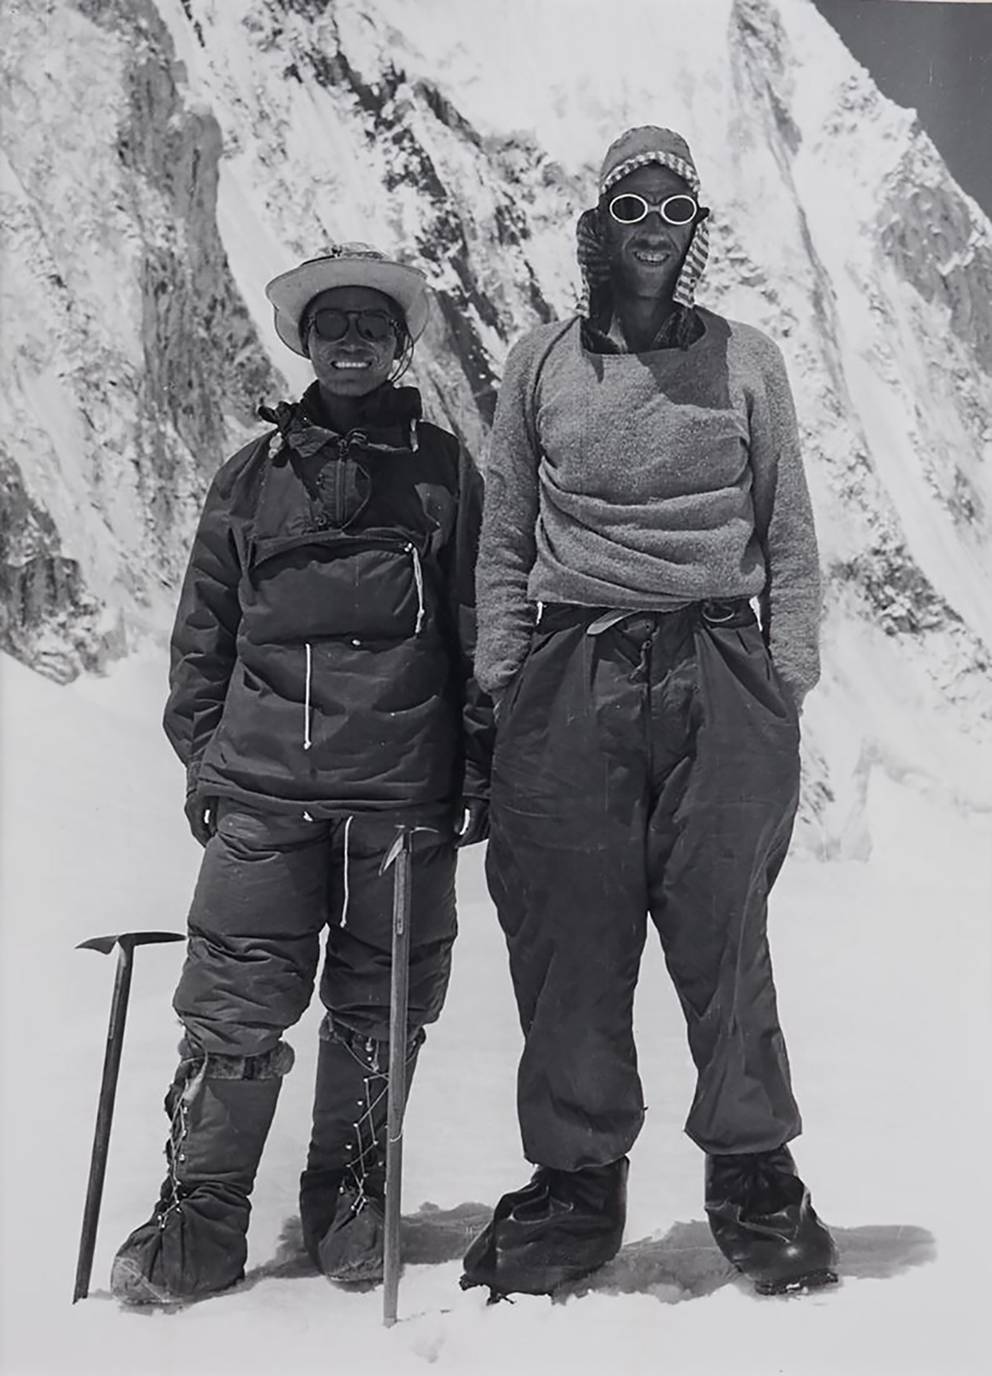 Original Photos Of Sir Edmund Hillarys Epic Summit Of Mt Everest Up For Auction Nz Herald 